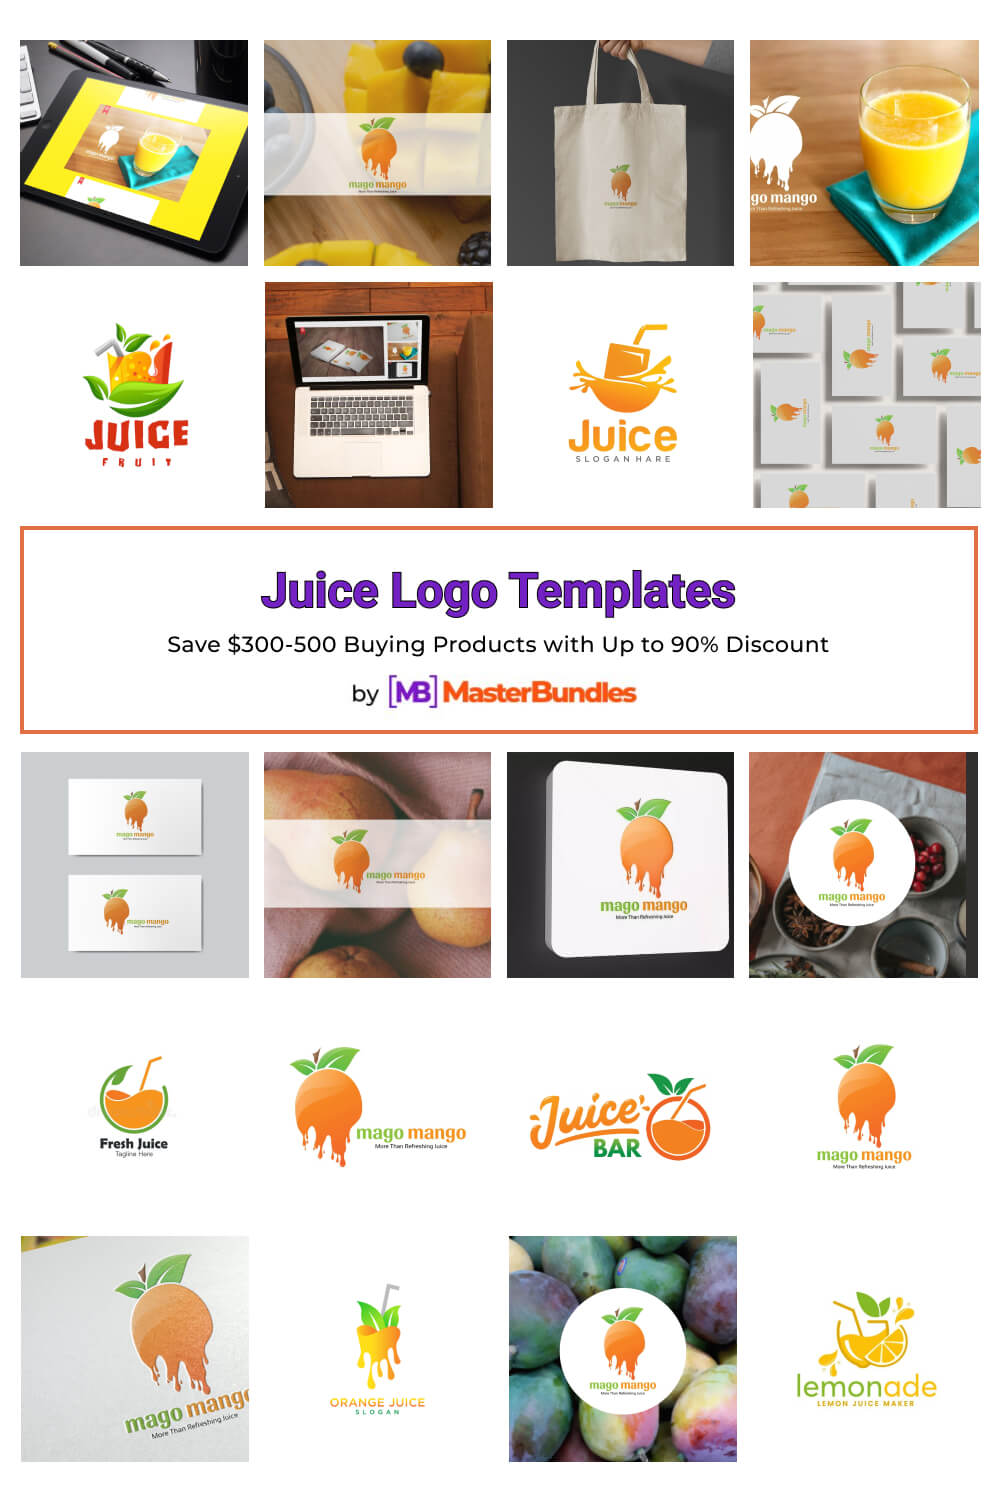 juice logo templates pinterest image.